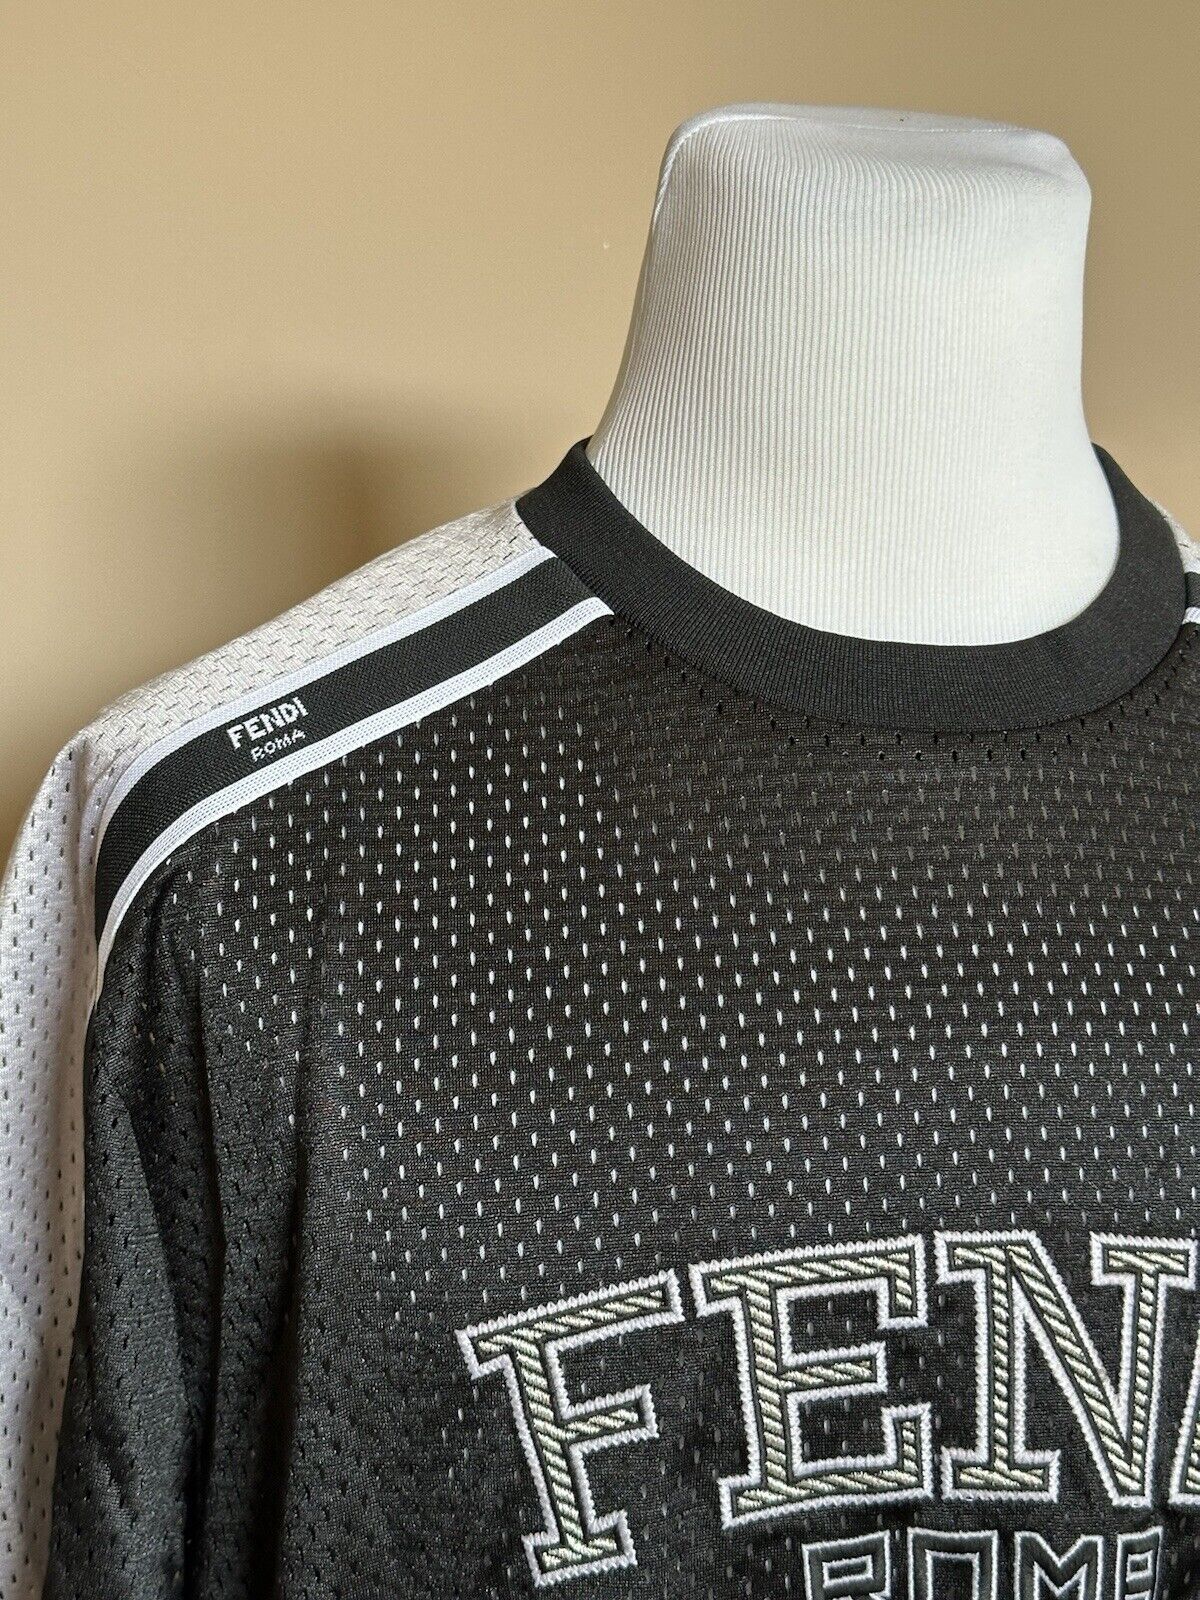 Fendi Logo Print Black/Silver Jersey Mesh T-Shirt XL FAF692 Italy NWT $850